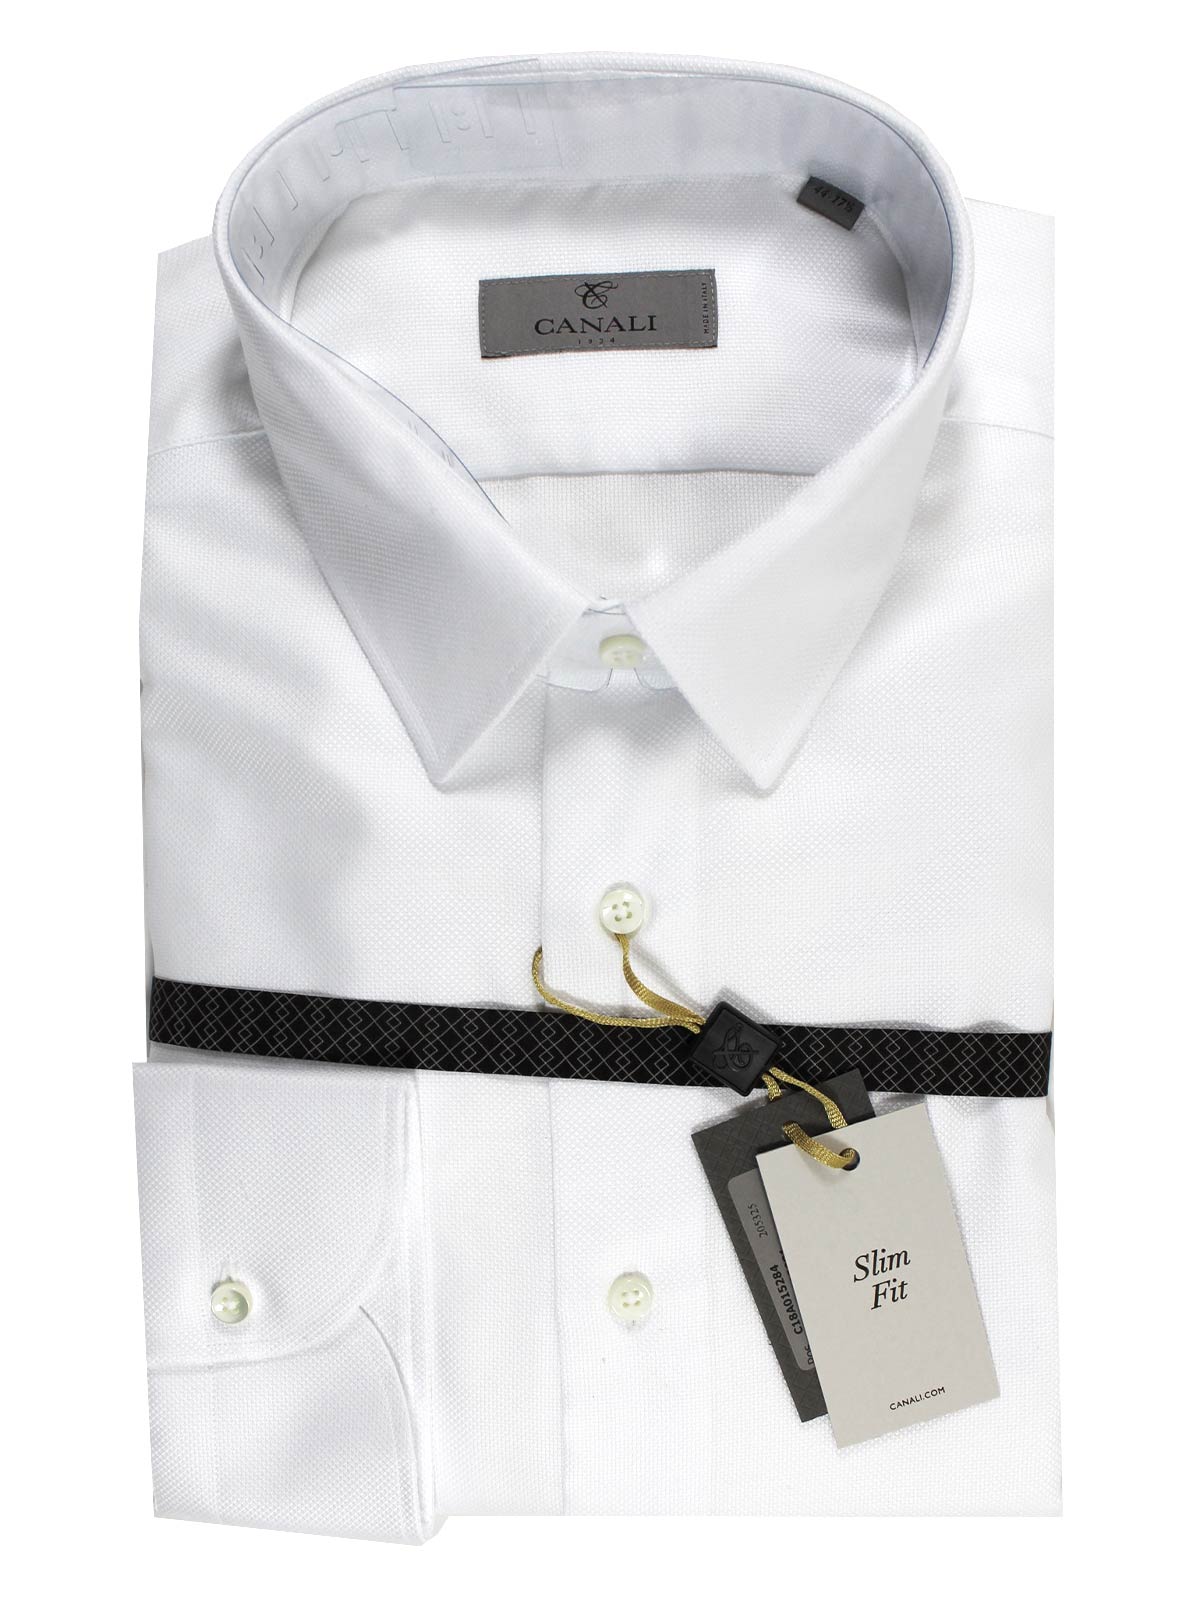 Canali Dress  Shirt  Solid White  Slim Fit SALE  Tie Deals